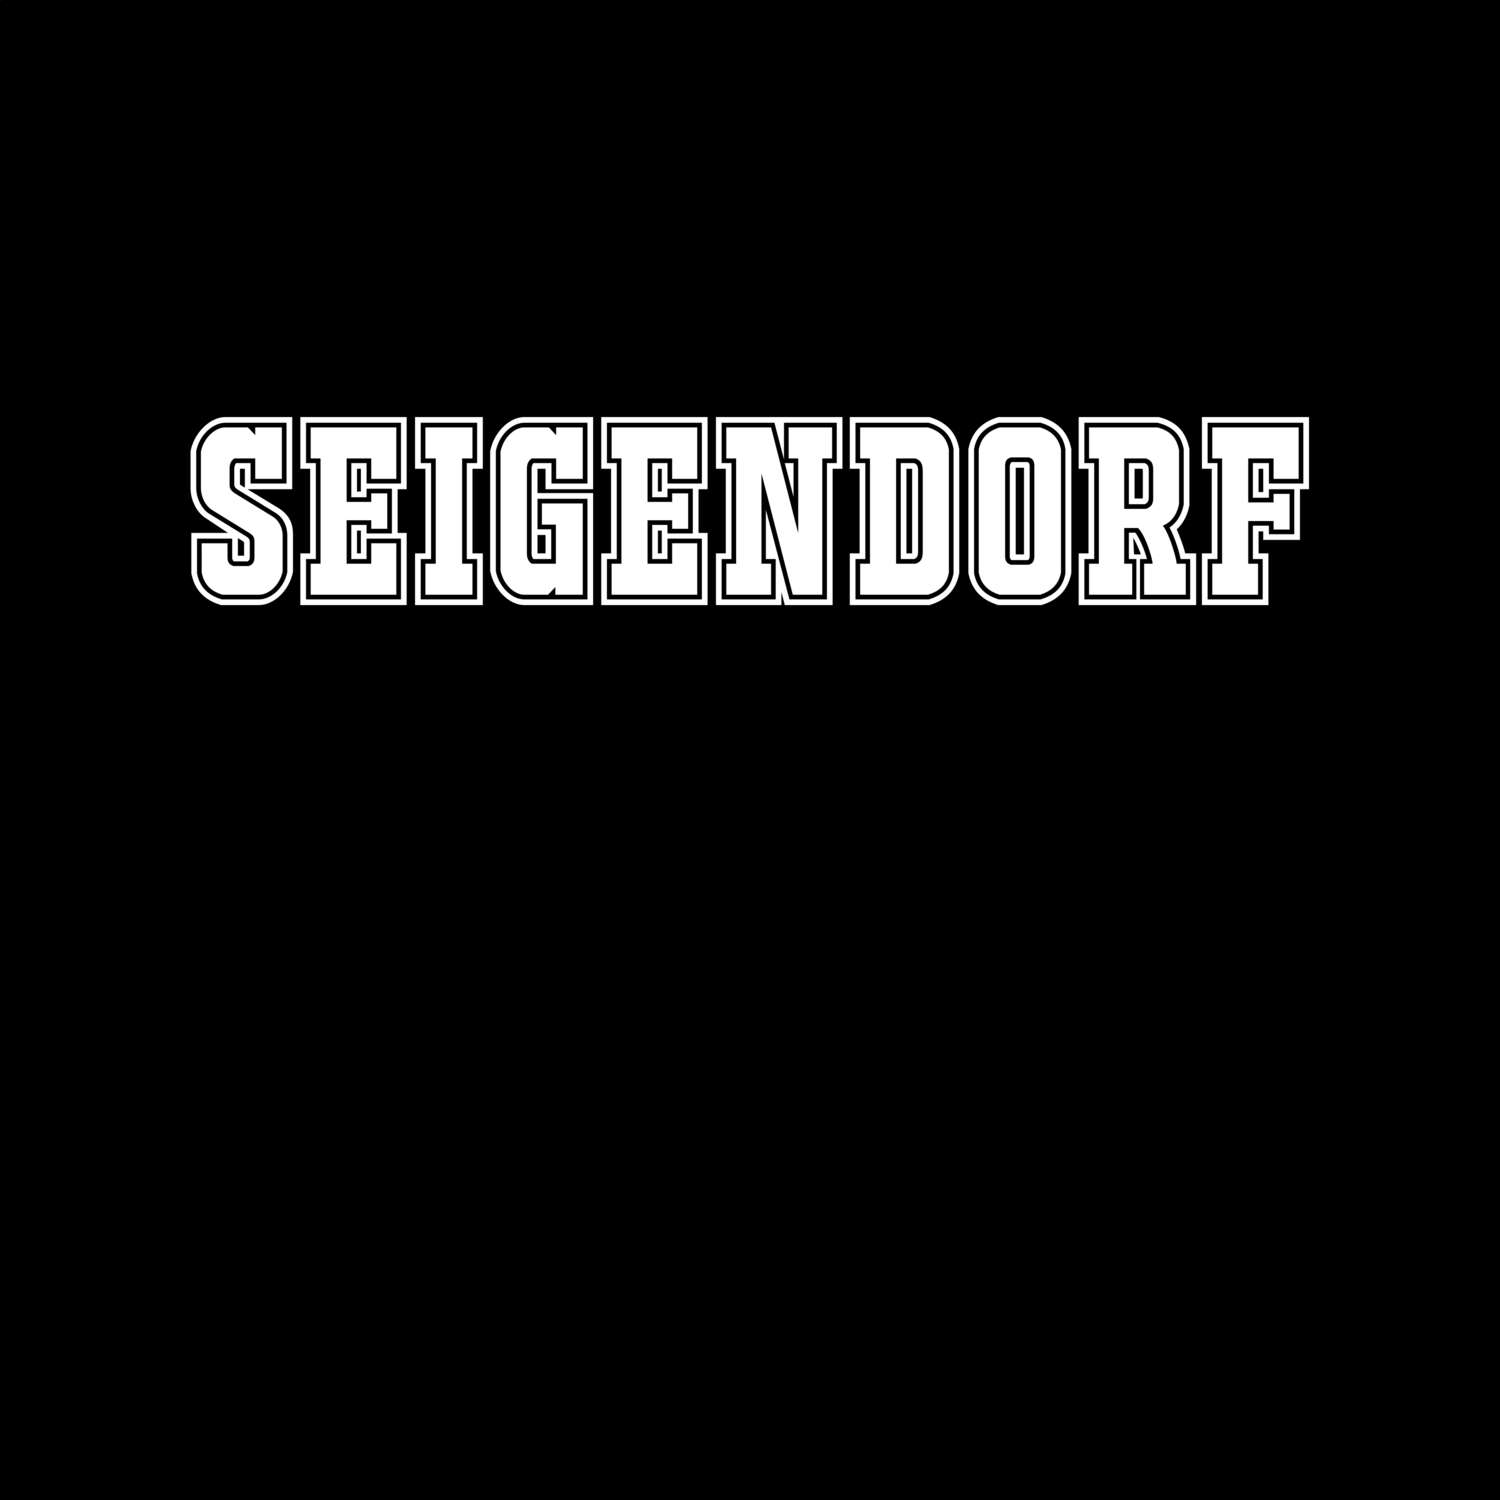 Seigendorf T-Shirt »Classic«